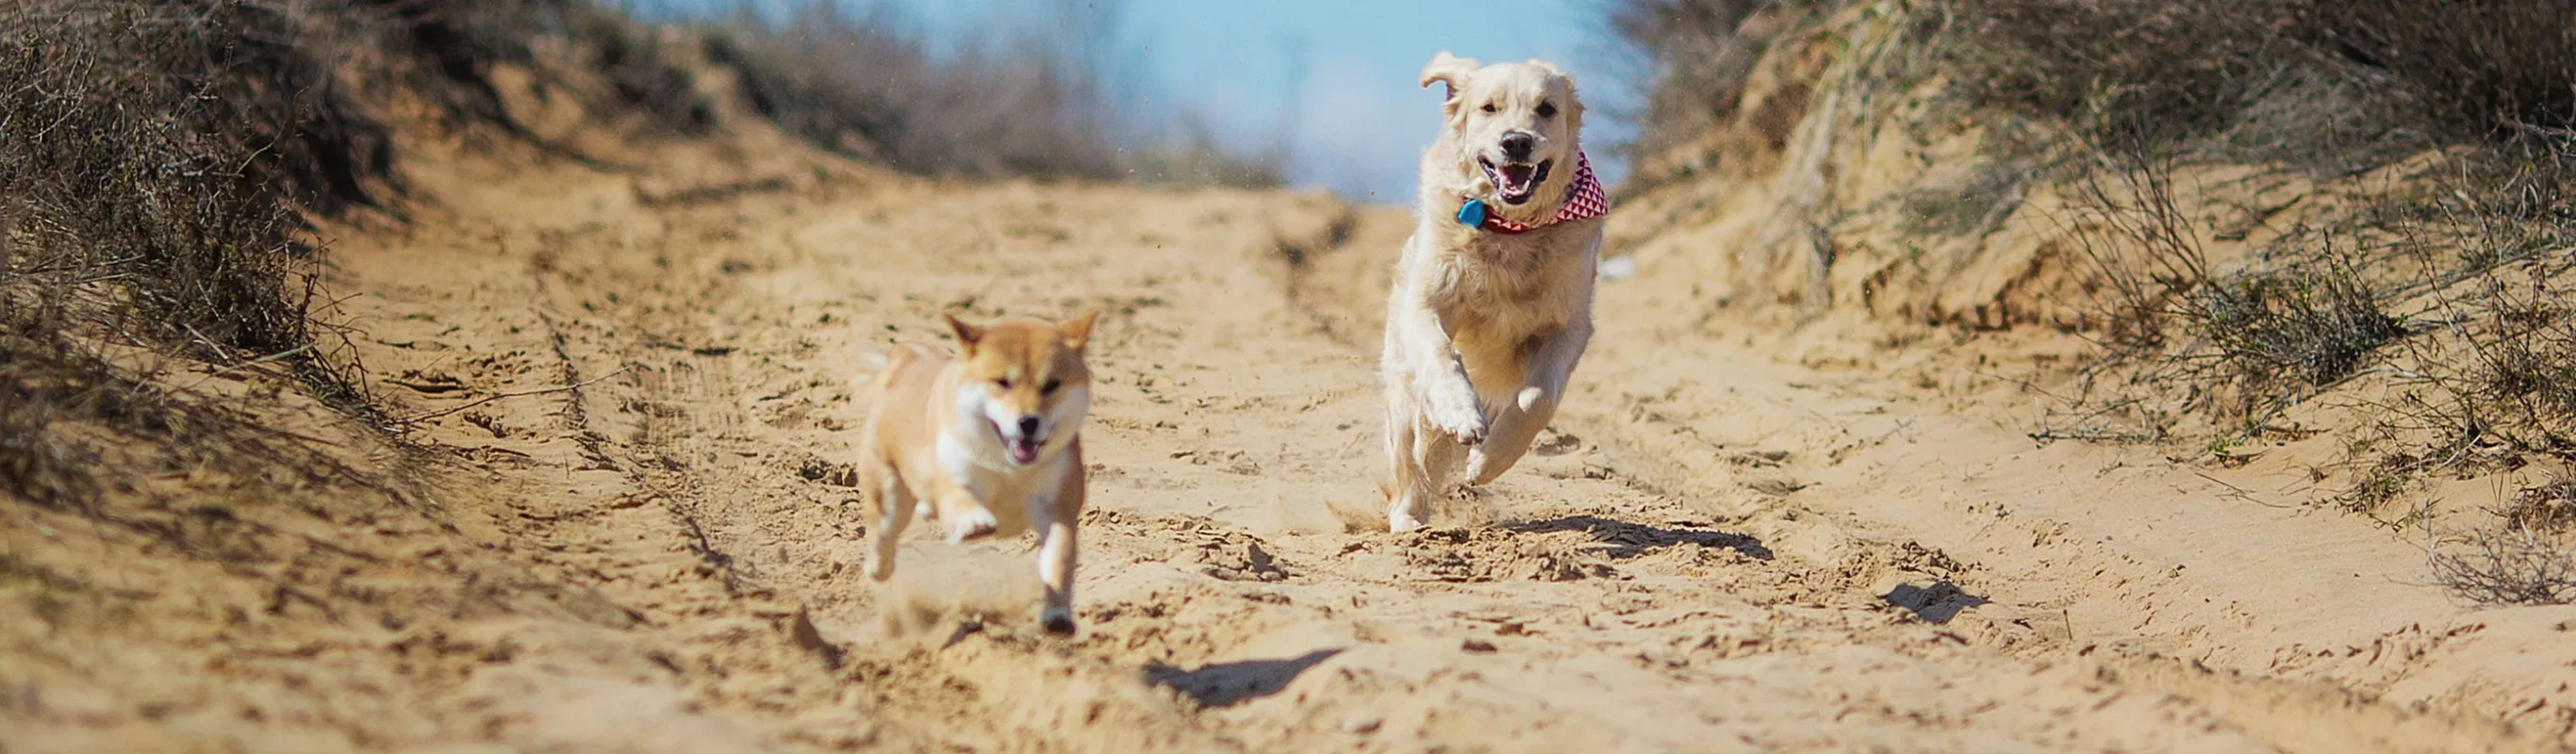 Dogs running through sand